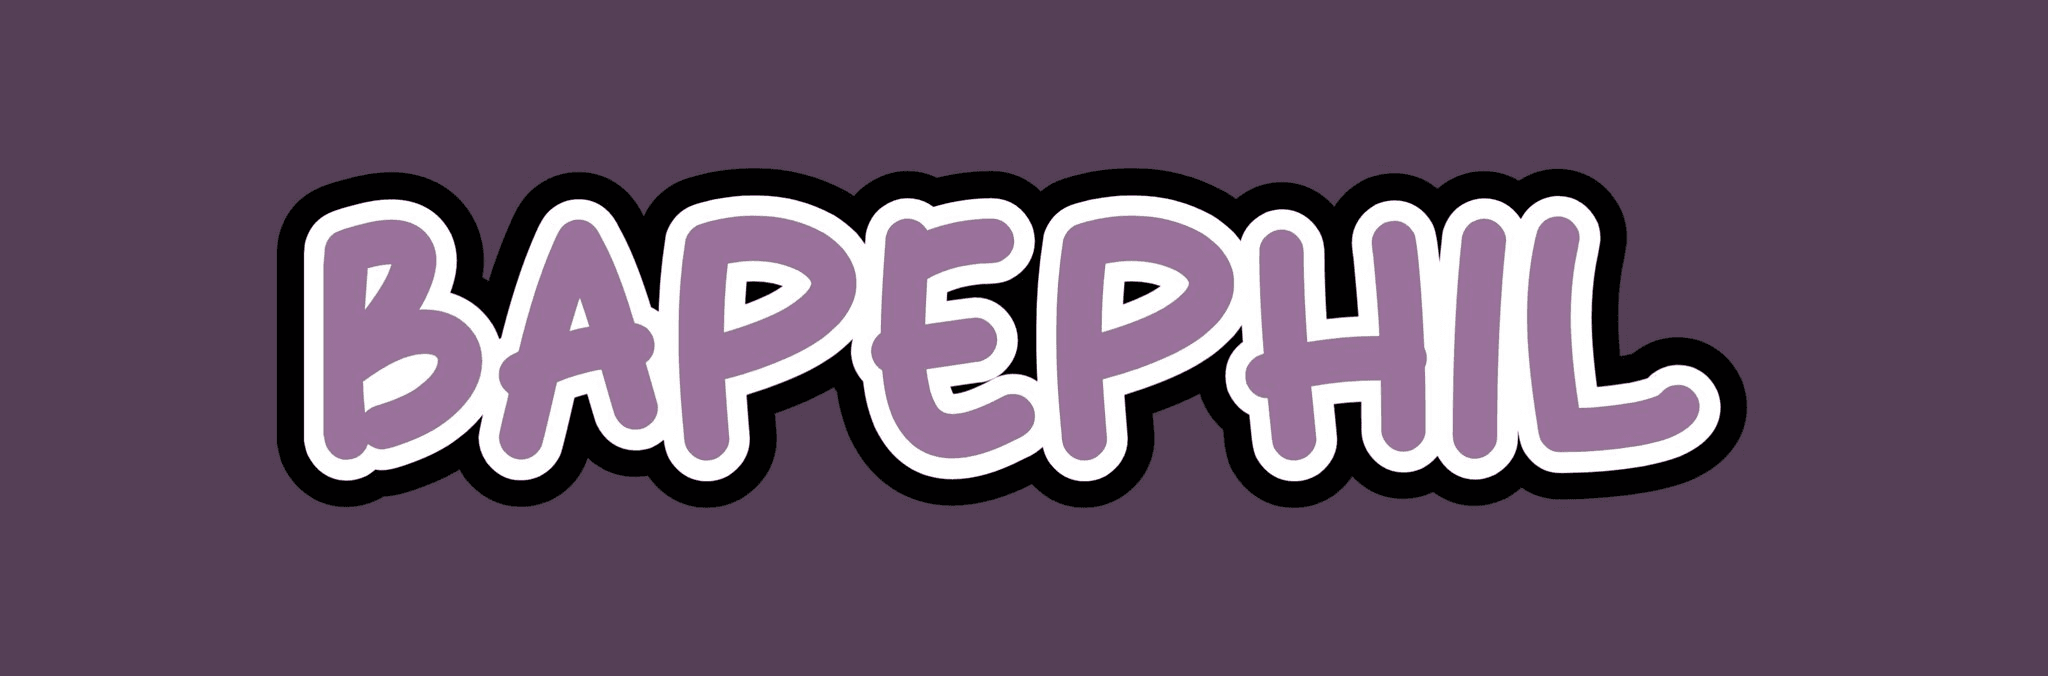 bapephil2 banner